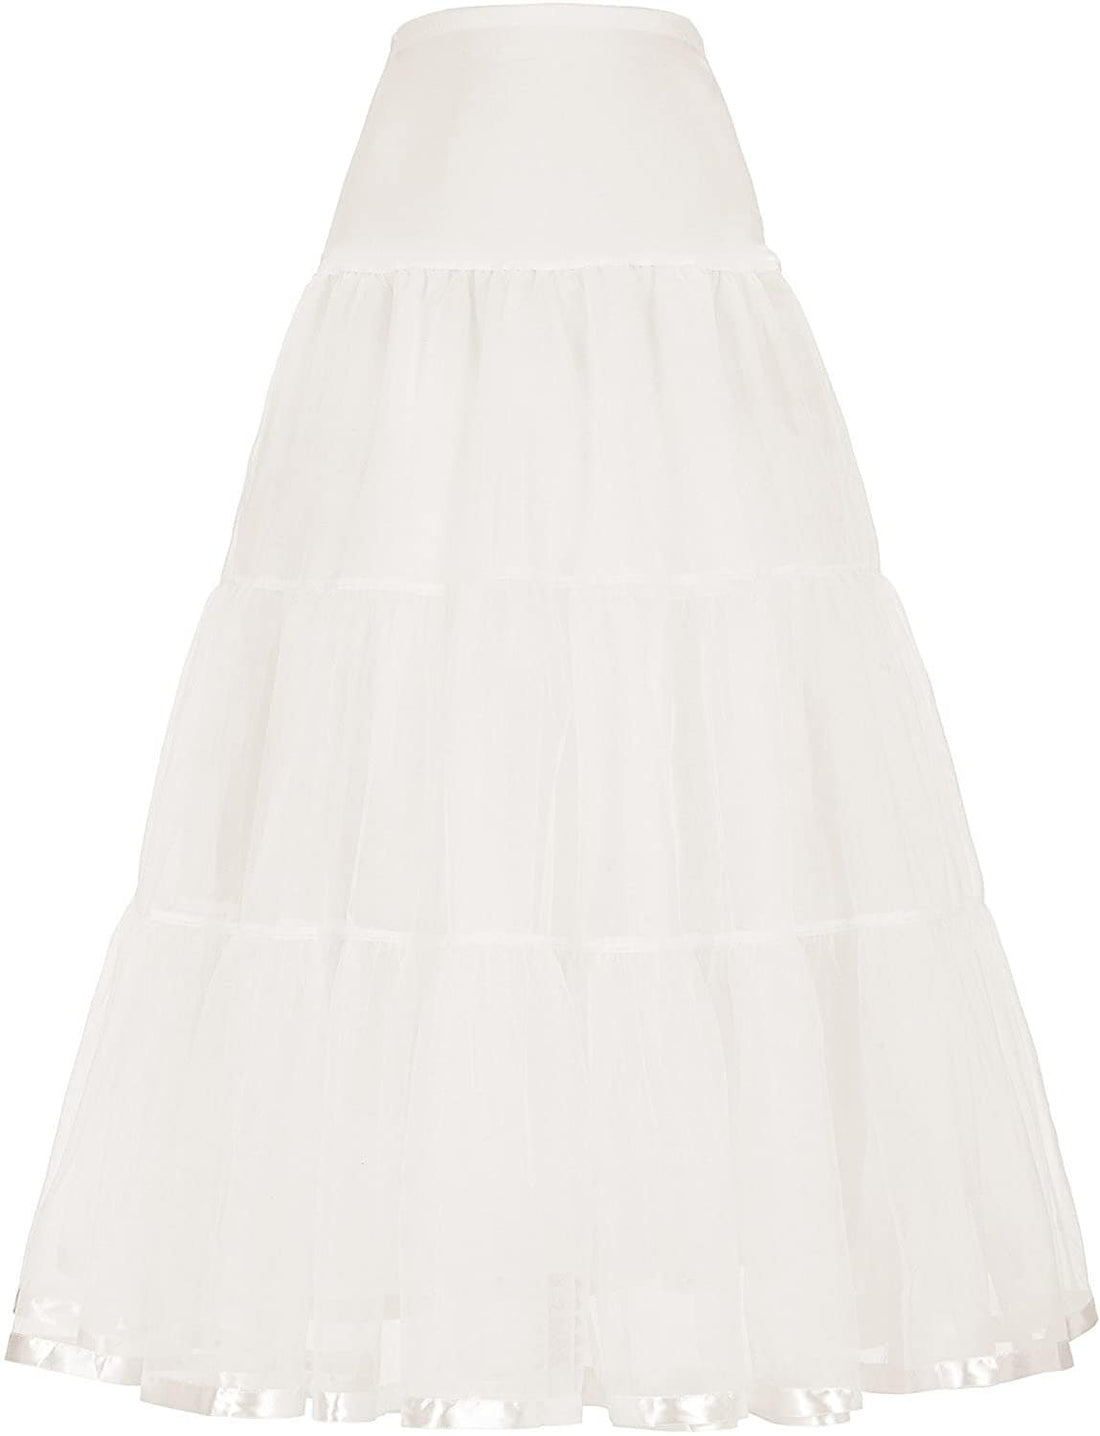 Petticoat skirt | Fluffy skirt | Add to your Dress